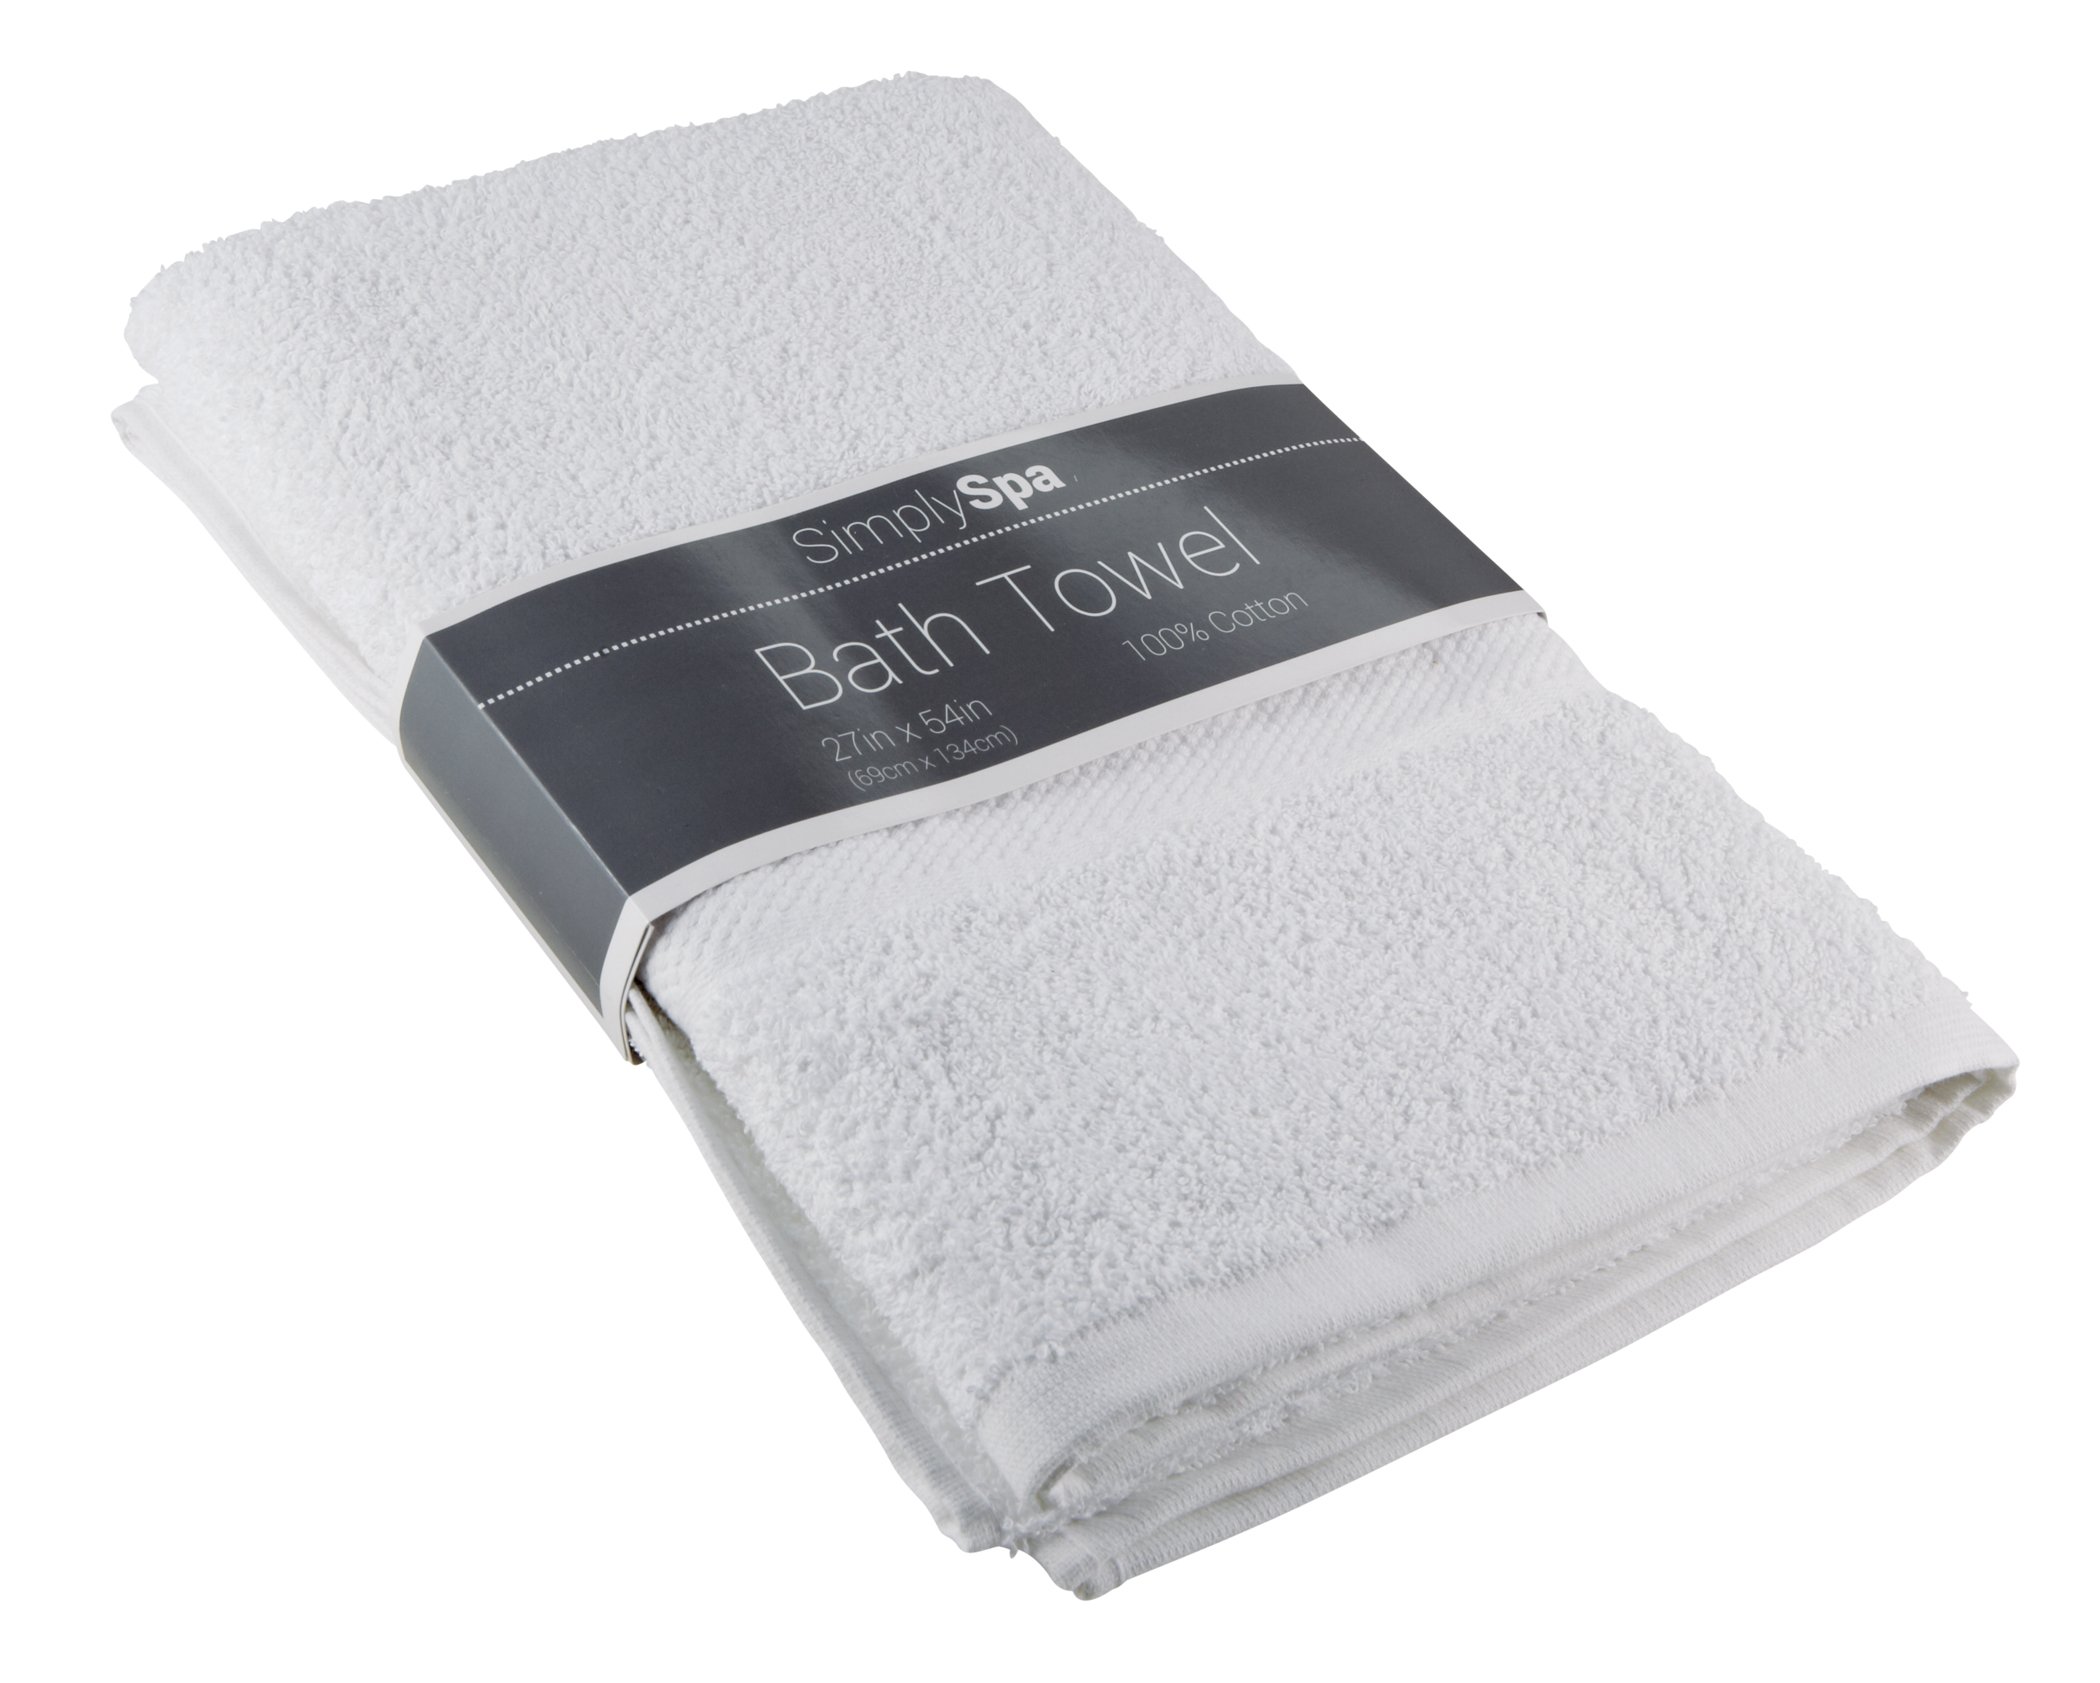 Simply Spa Bath Towel White - Shop Towels & Washcloths at H-E-B